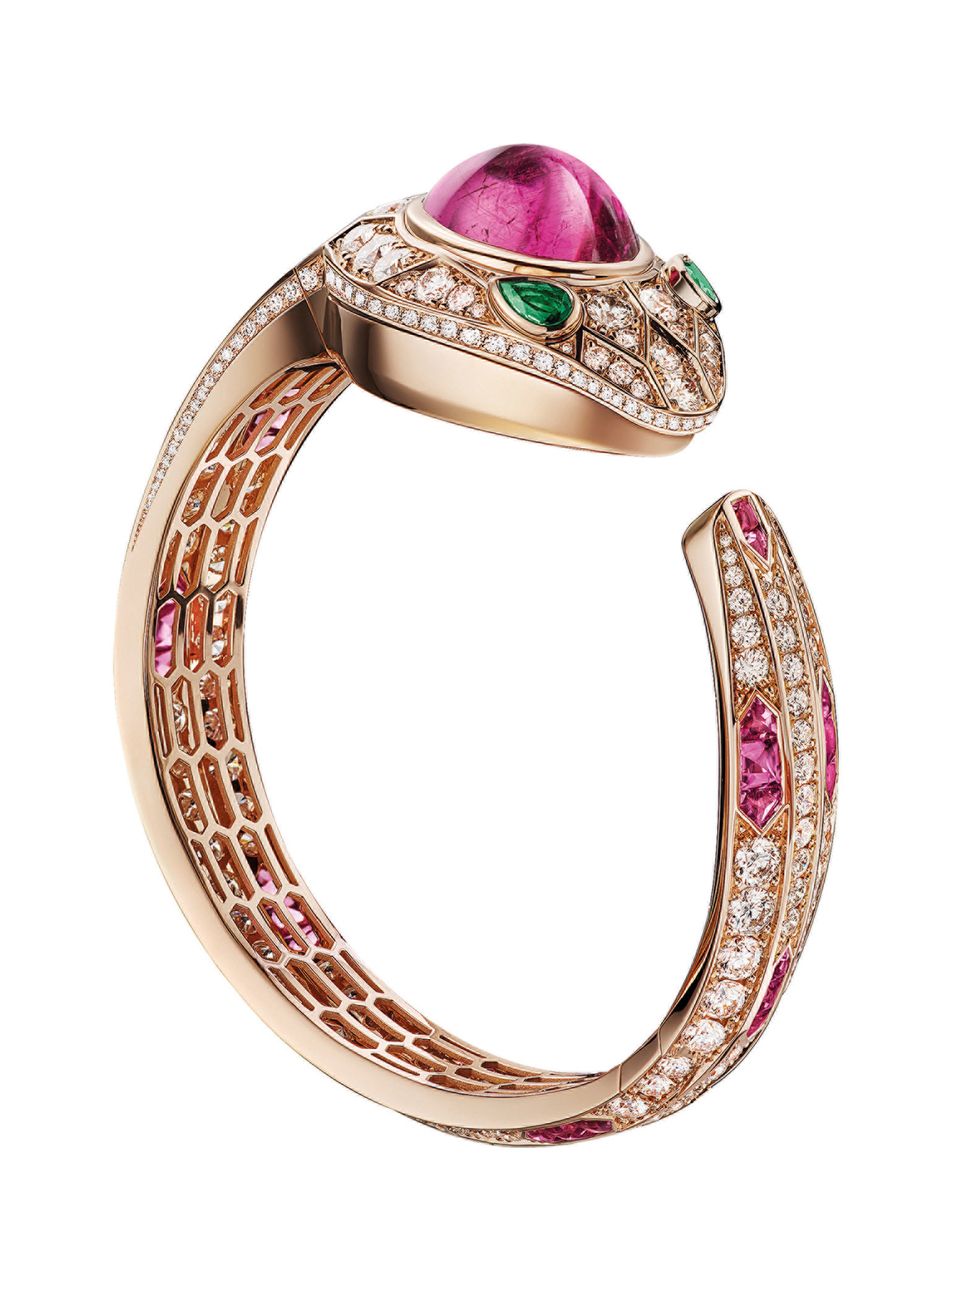 Jewellery, Fashion accessory, Gemstone, Ruby, Ring, Diamond, Engagement ring, Body jewelry, Bangle, Magenta, 